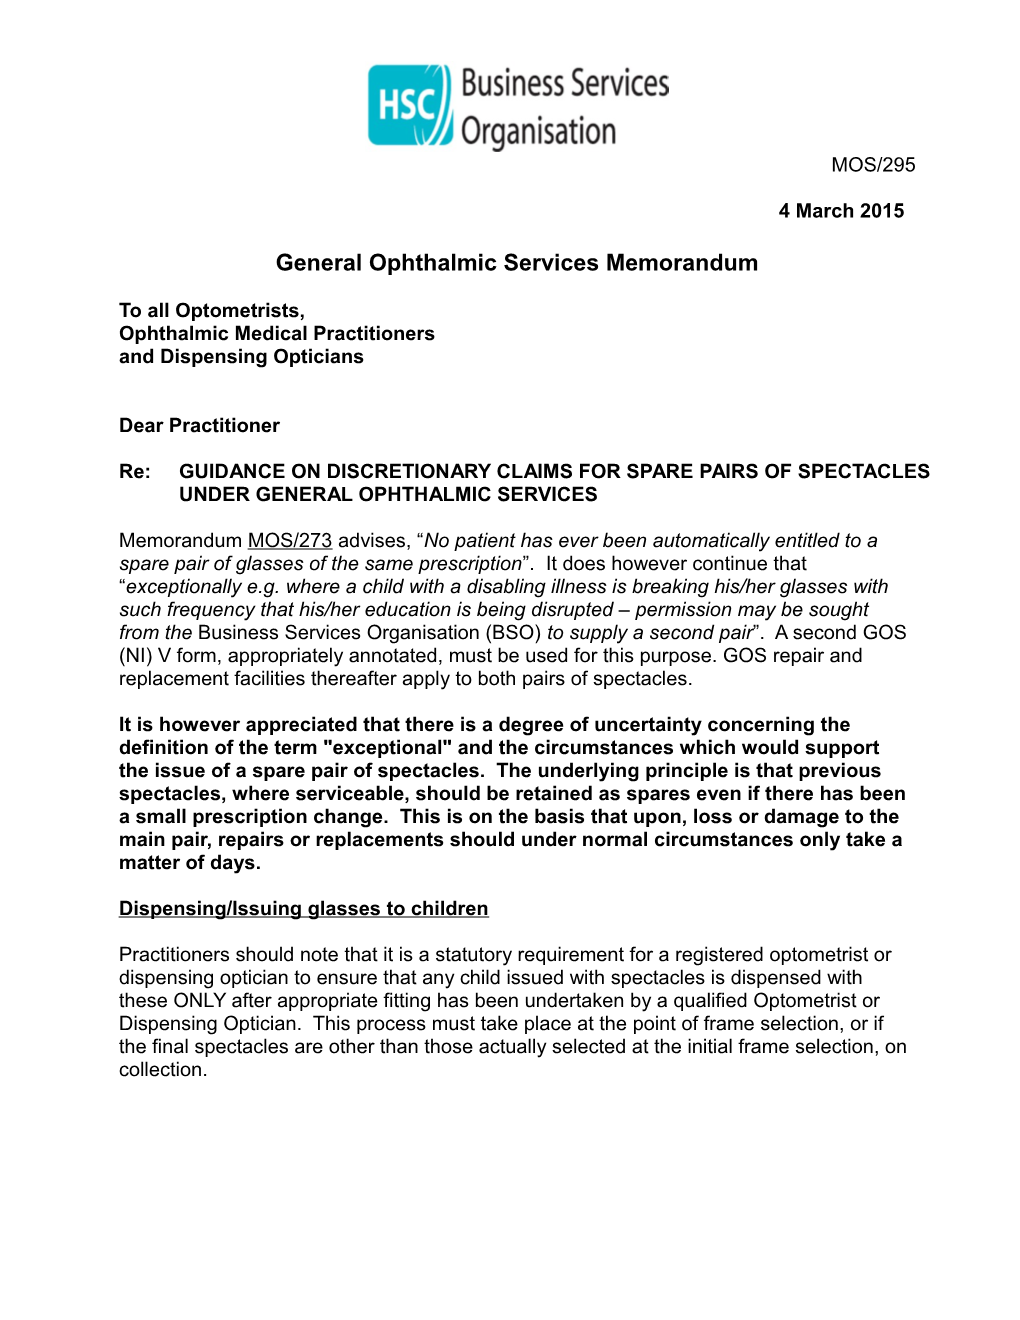 General Ophthalmic Services Memorandum